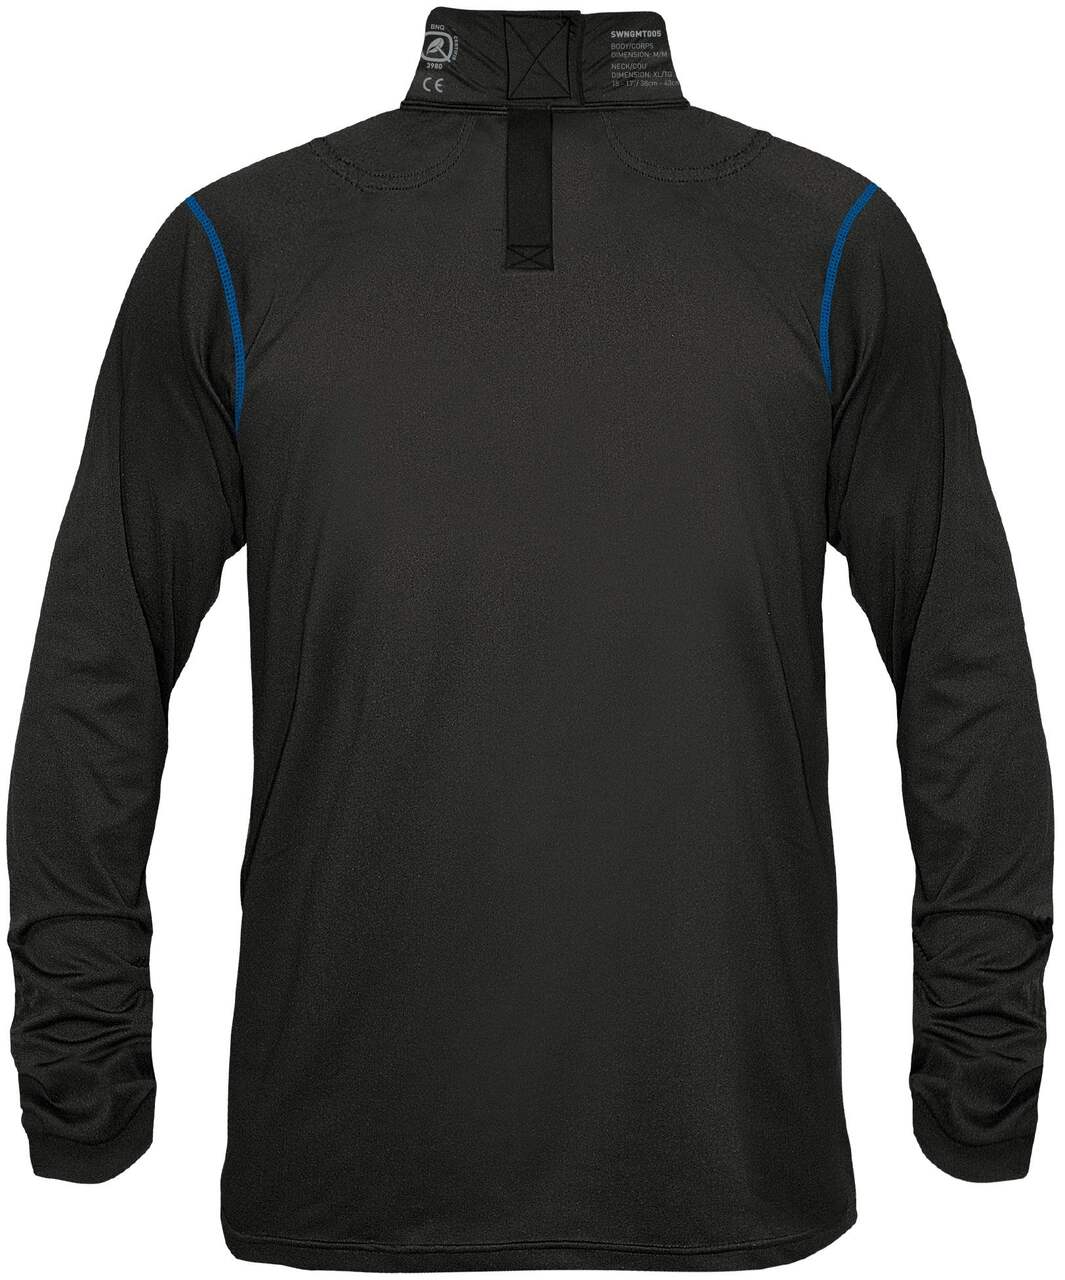  Boys Padded Compression Shirt Sports Protective Vest Rash  Guard Soccer Basketball Training Shirts YS : Sports & Outdoors